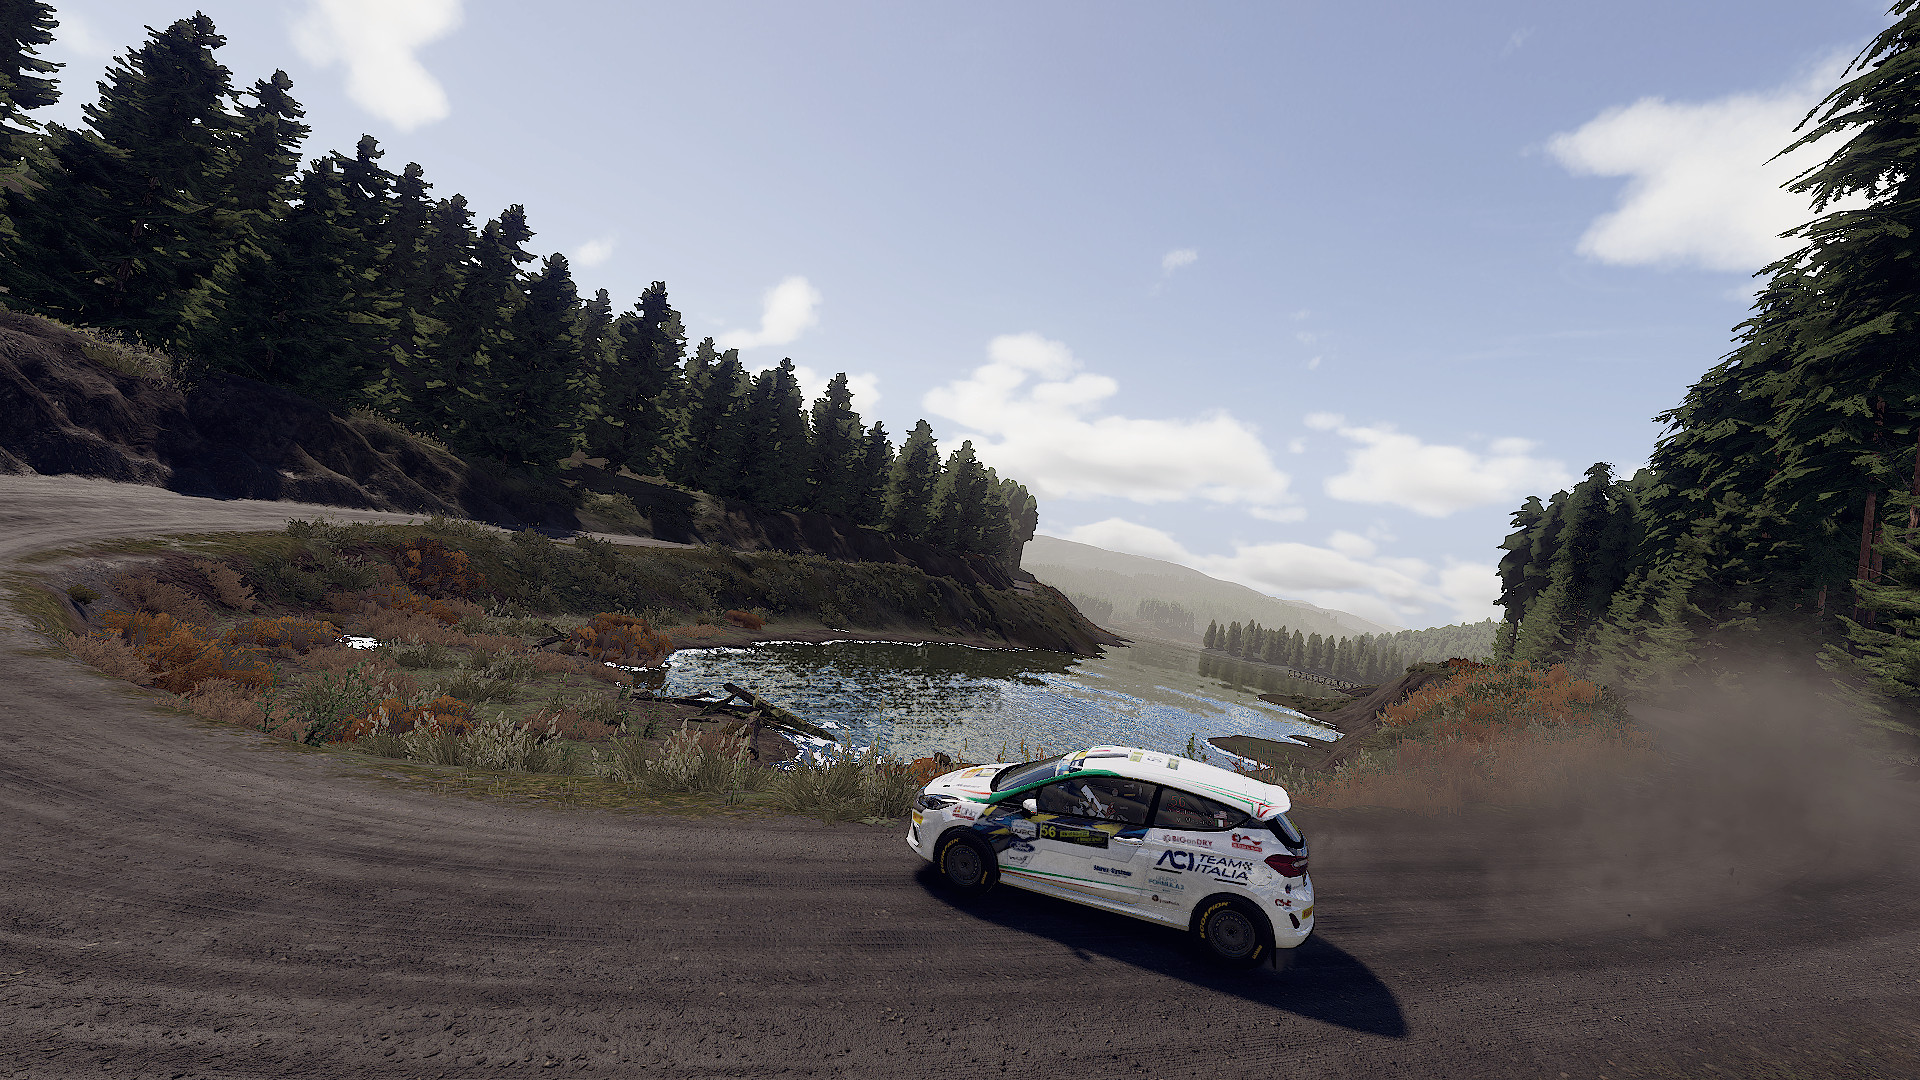 Ралли 9. WRC 9. WRC 9 FIA World Rally Championship. Rally Stars игра. WRC 9 последние версии игр.